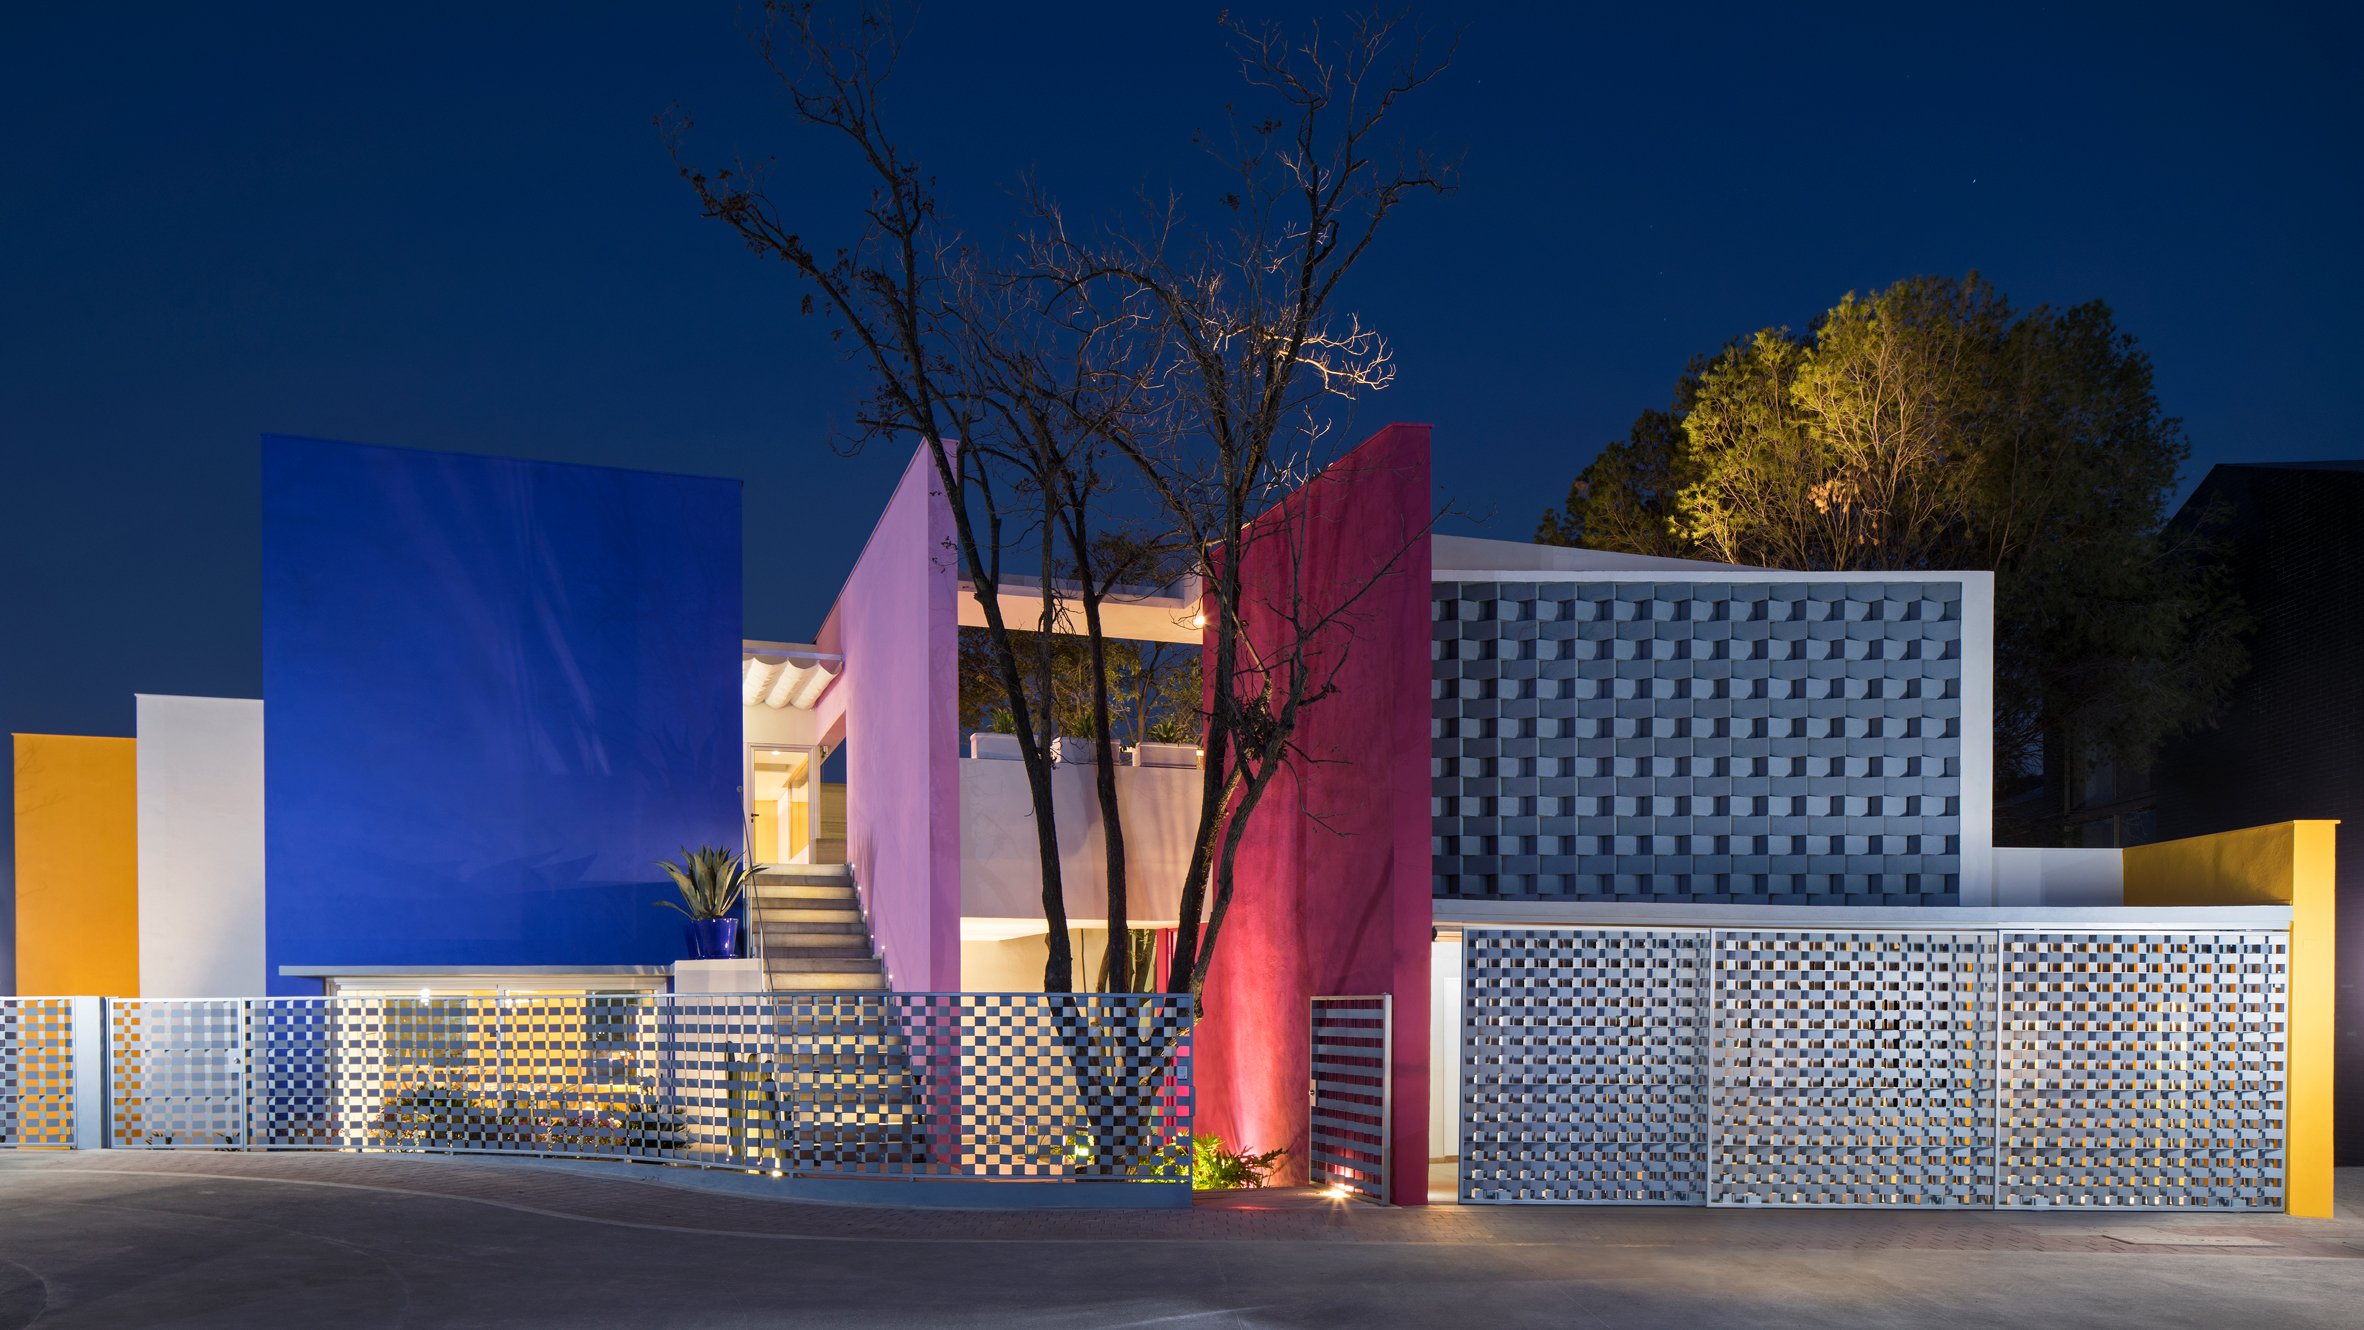 Colourful Barragán-esque house by Moneo Brock wraps four trees